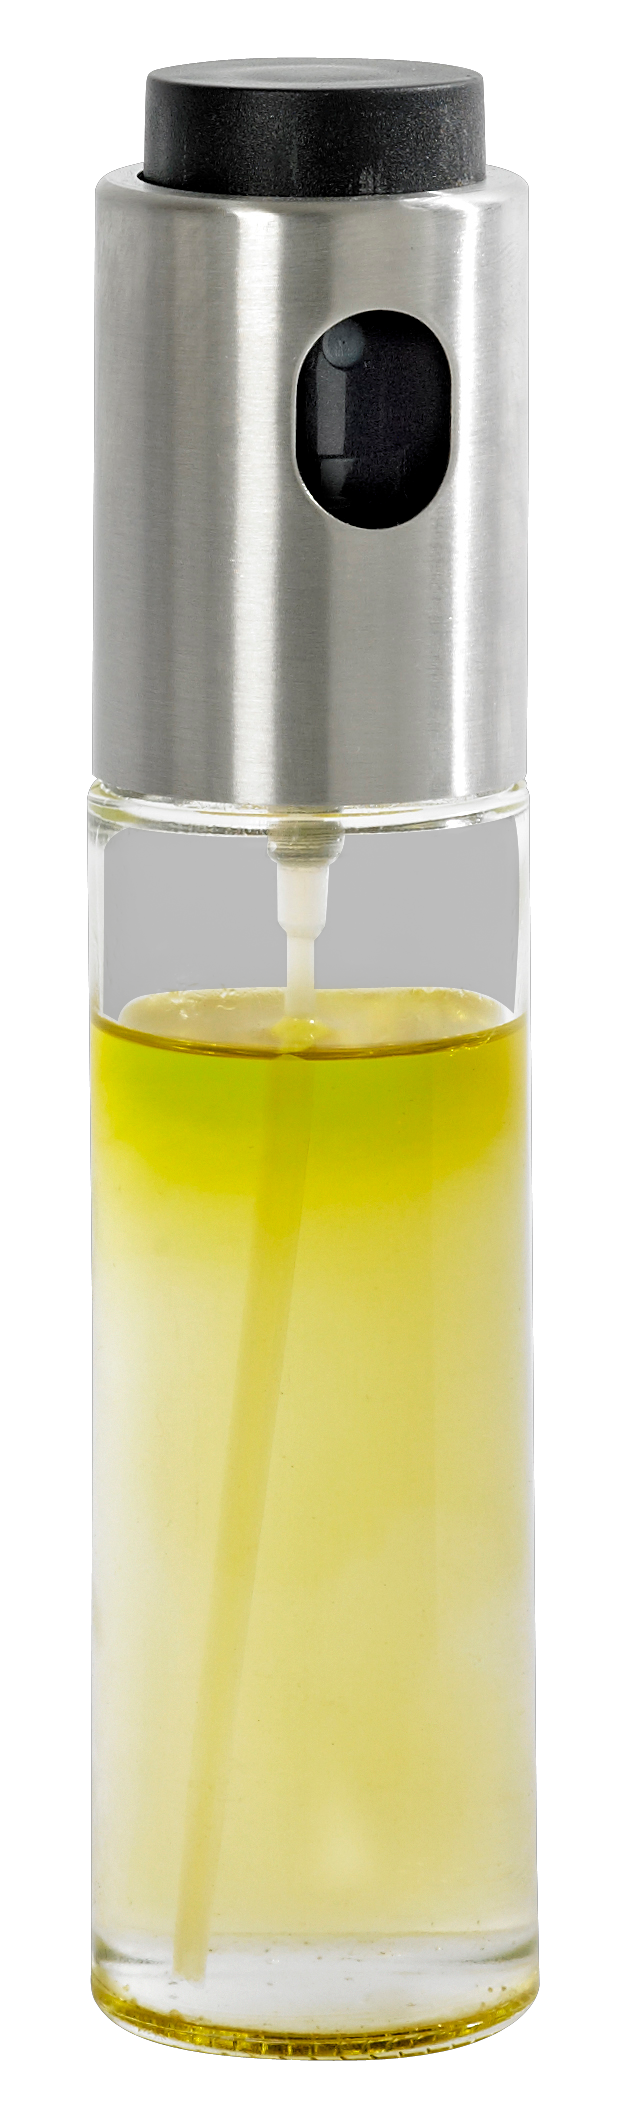 Bouteille Spray huile/vinaigre 15cl, Materiel-horeca